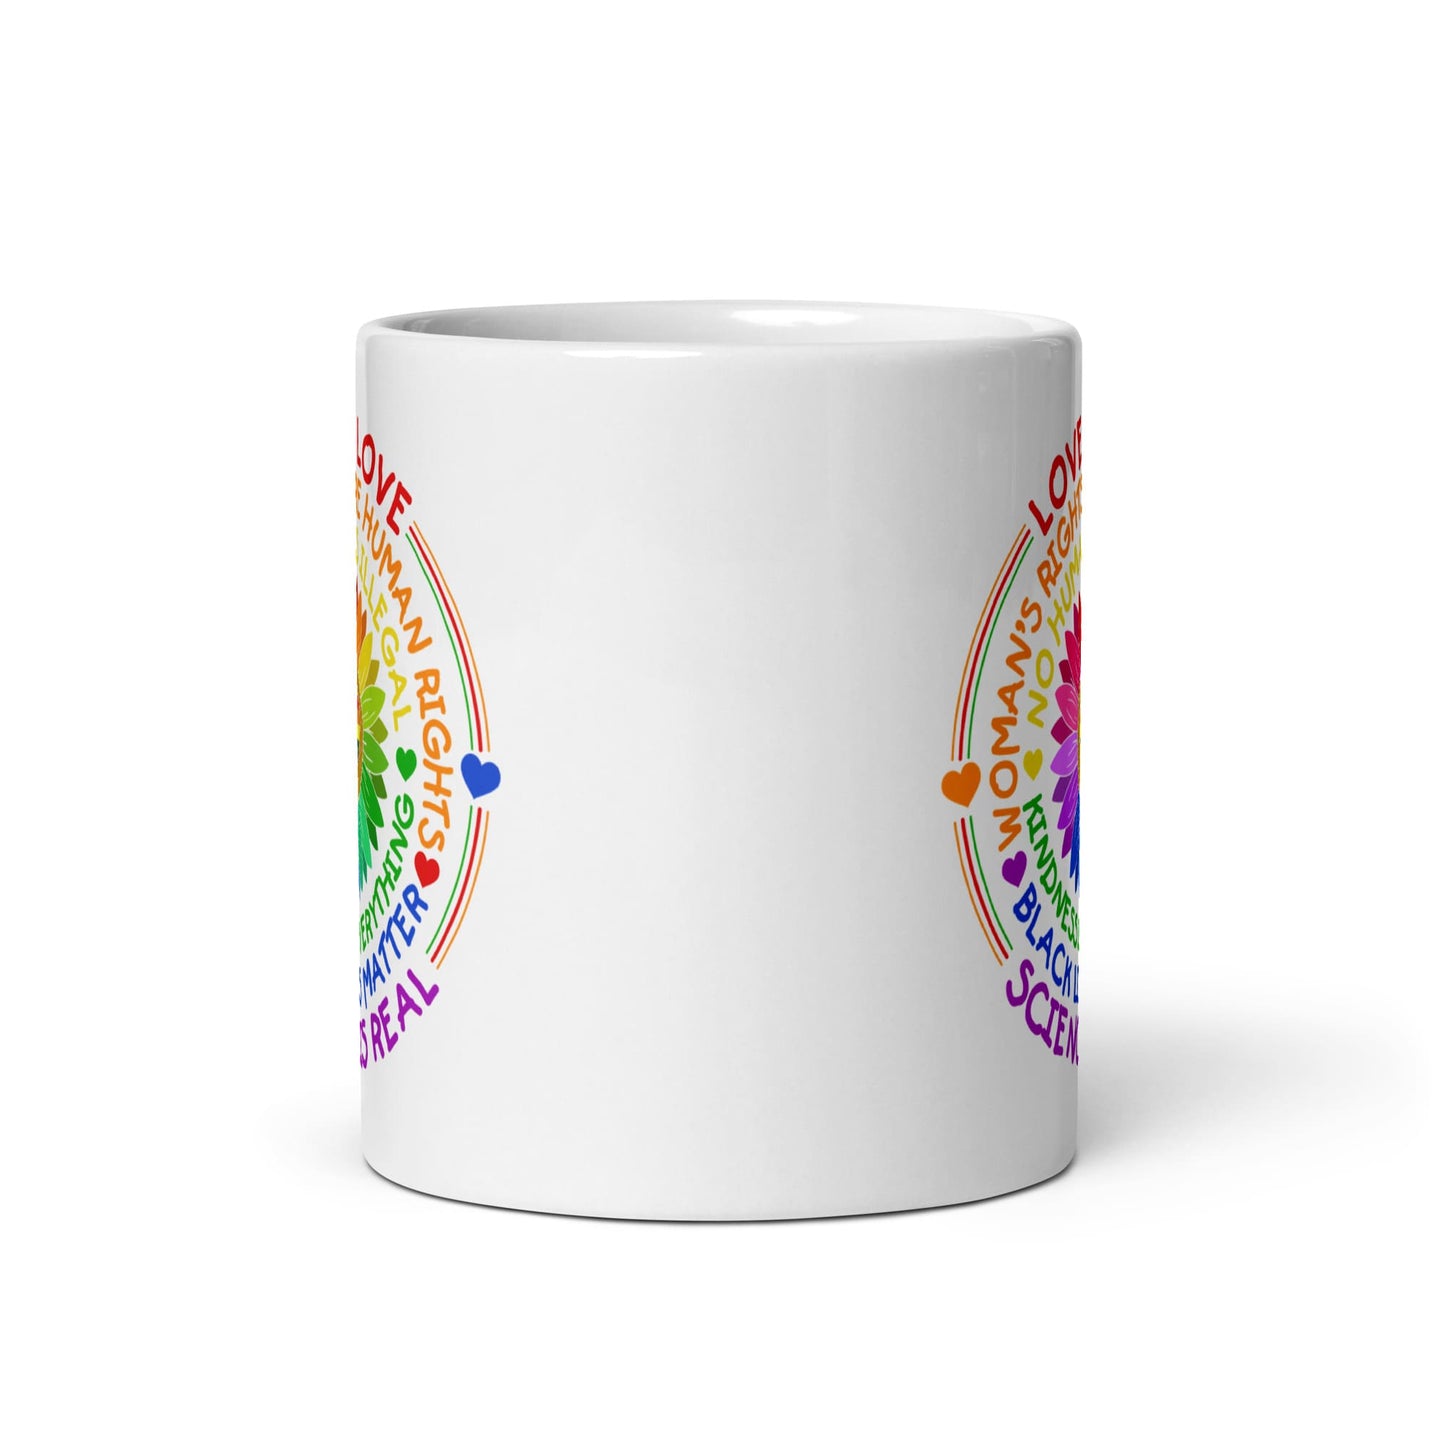 LGBTQ pride mug, human rights coffee or tea cup middle